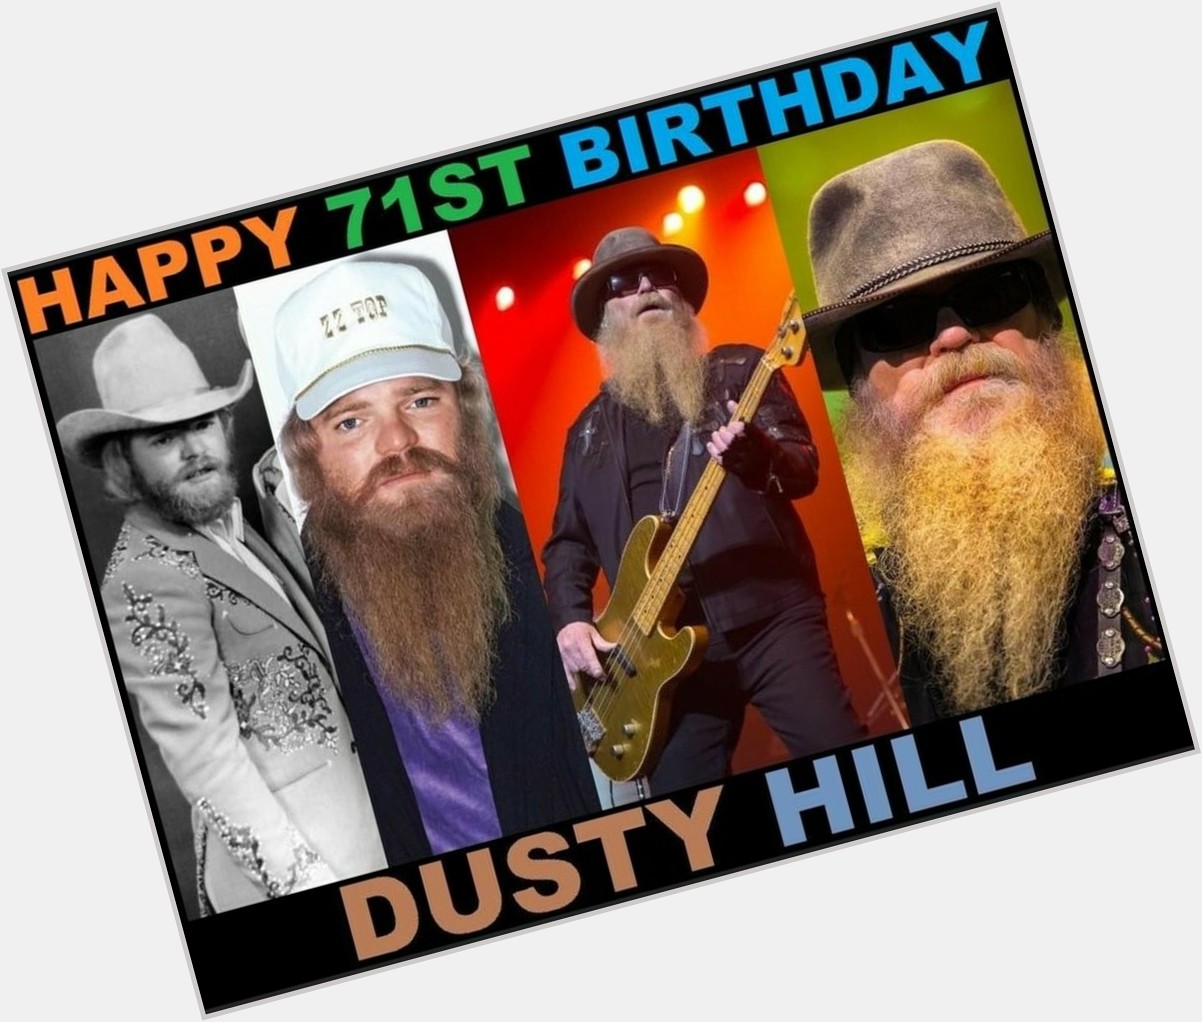 Happy Birthday, Dusty Hill       